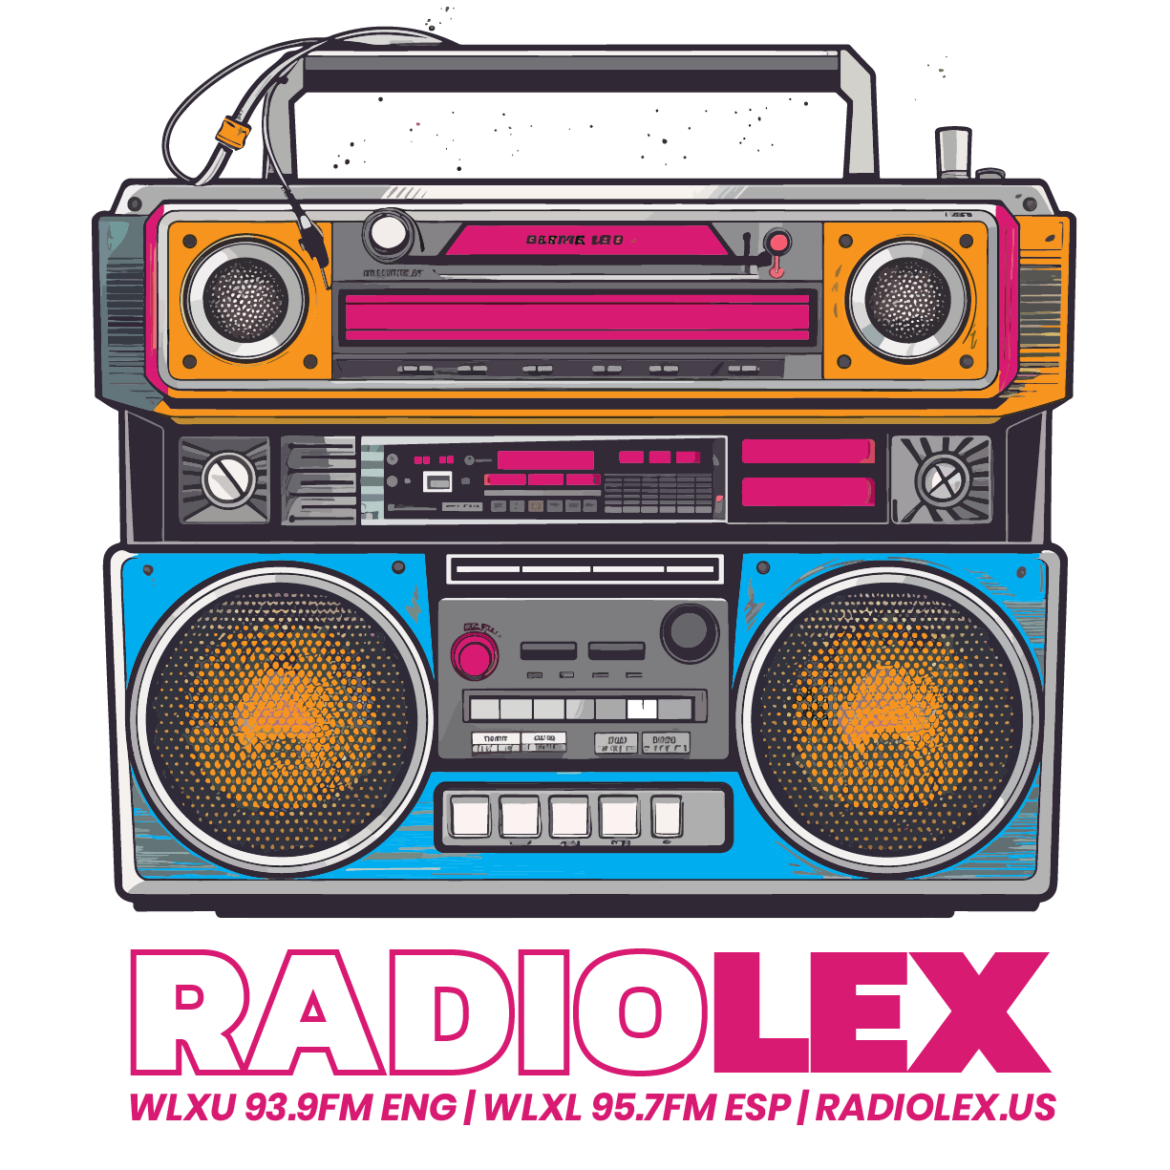 radiolex logo